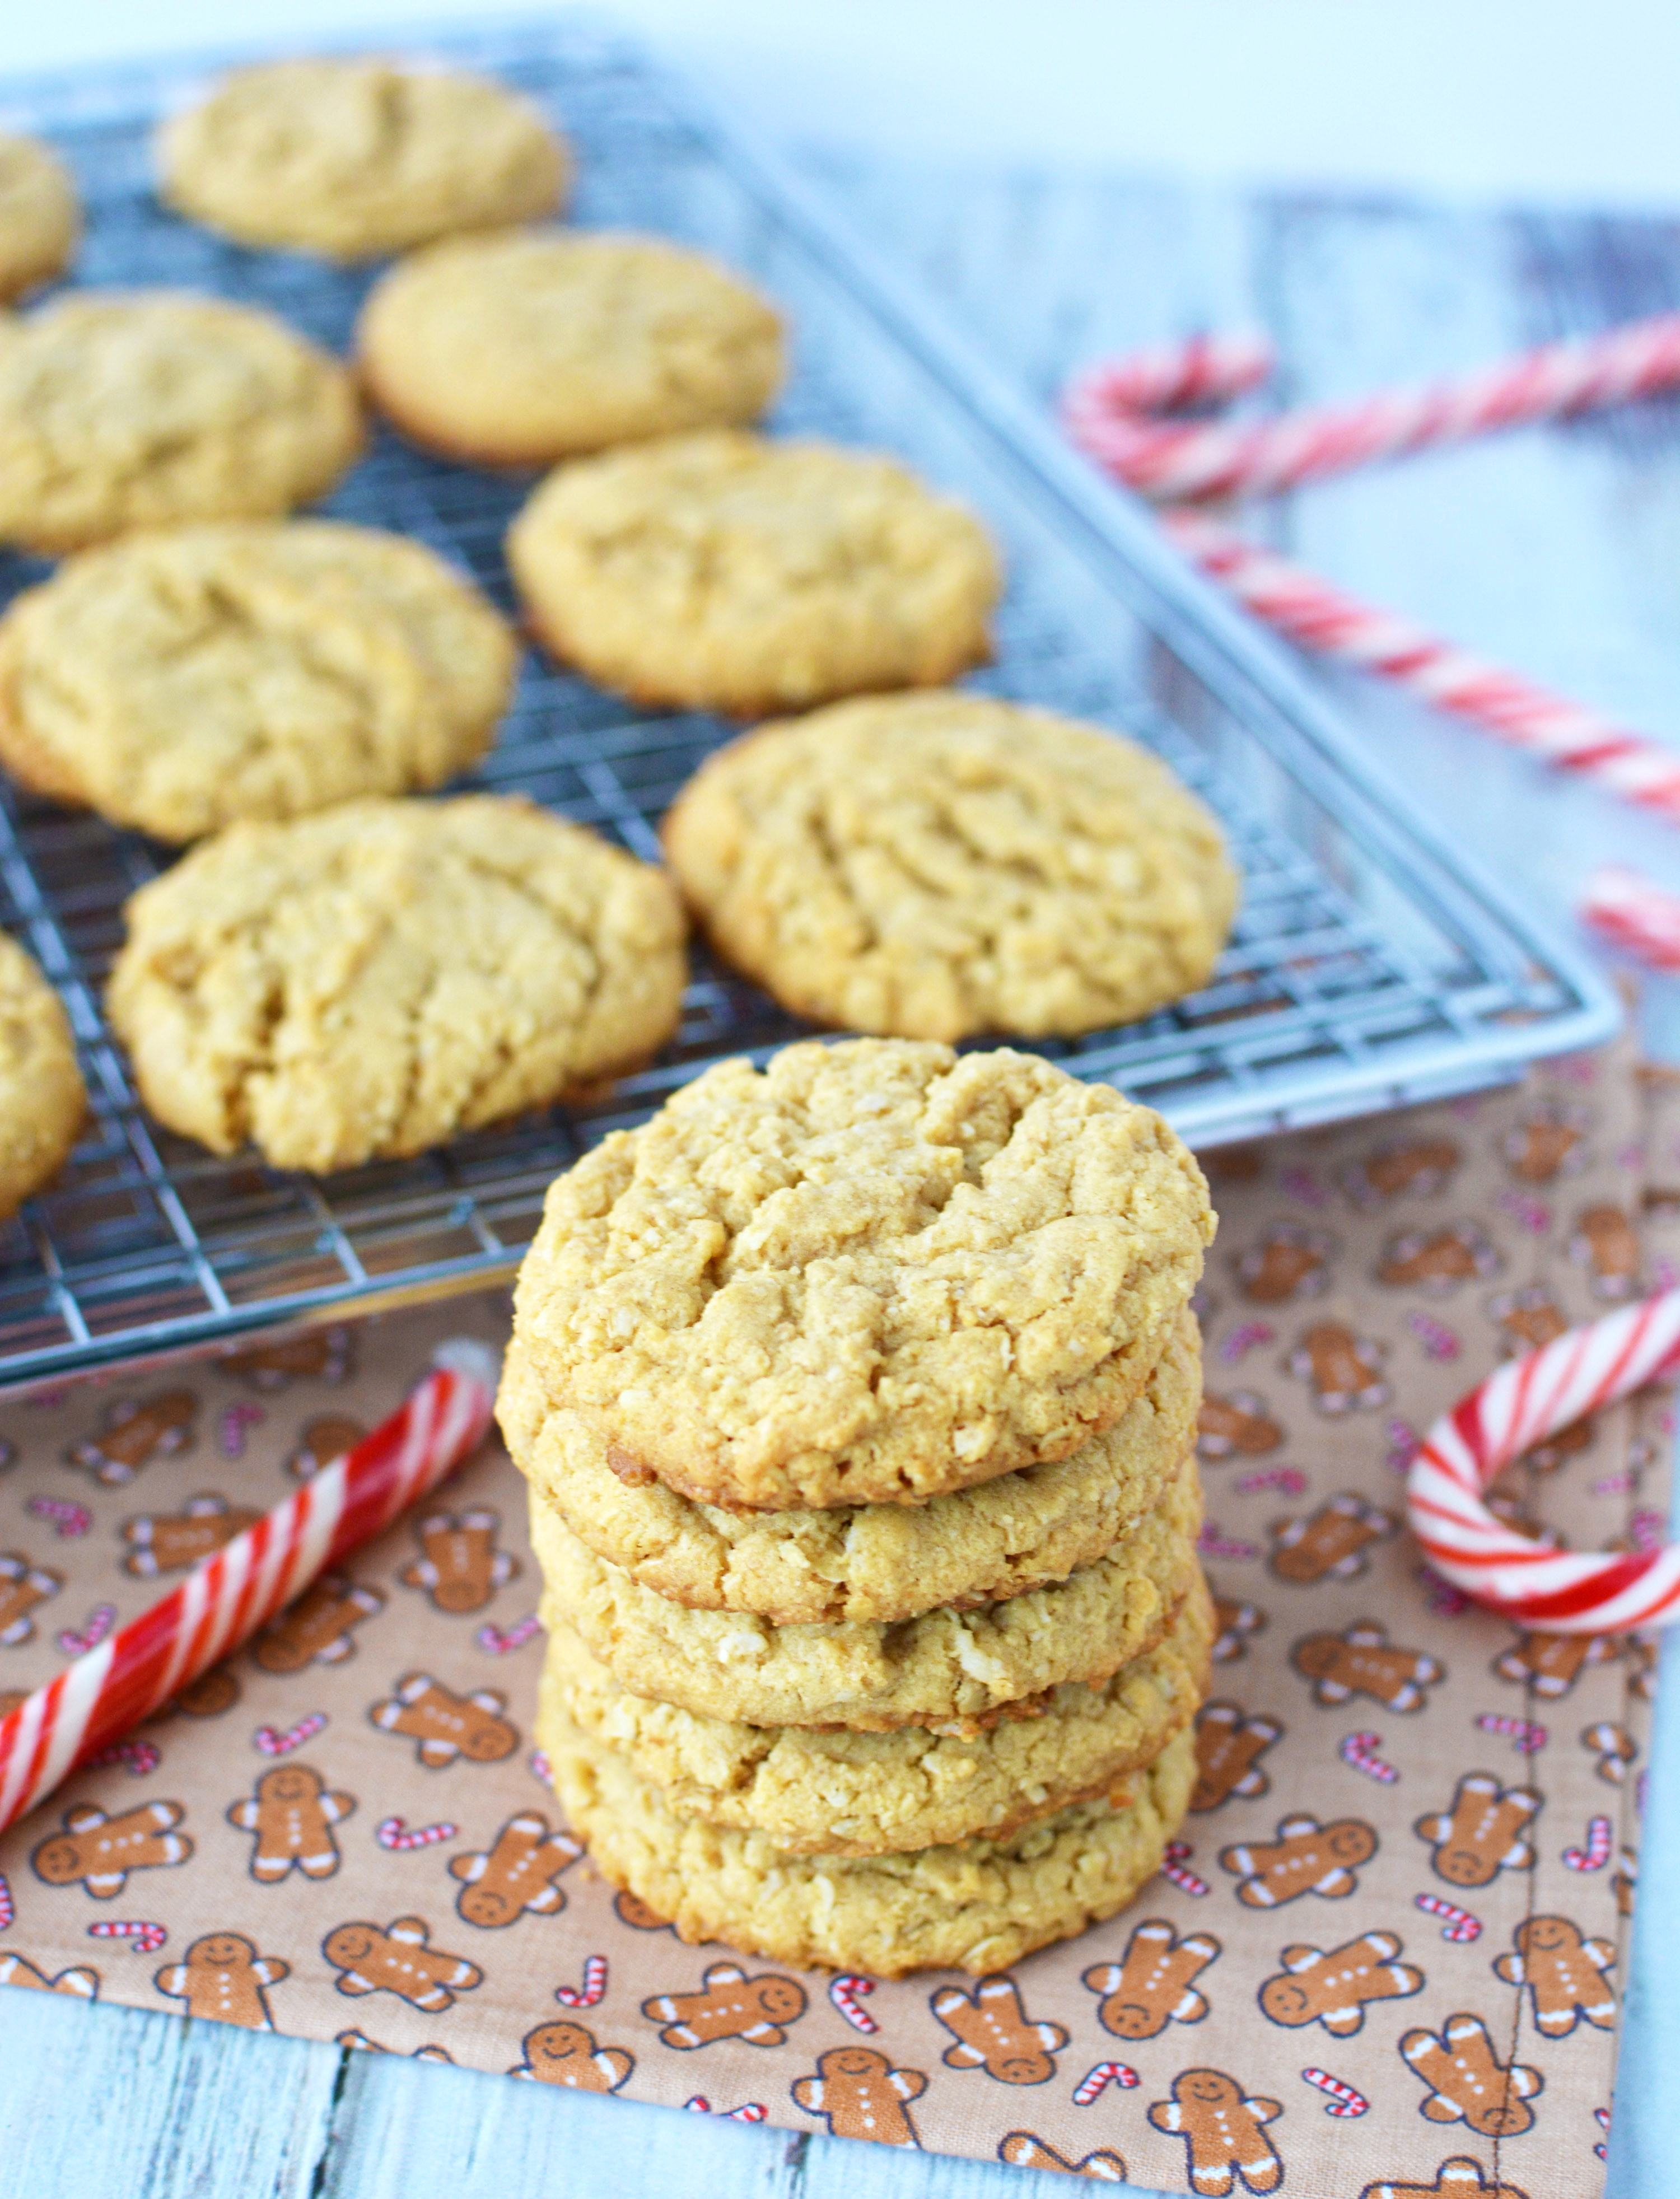 Oatmeal Gingerbread Cookies